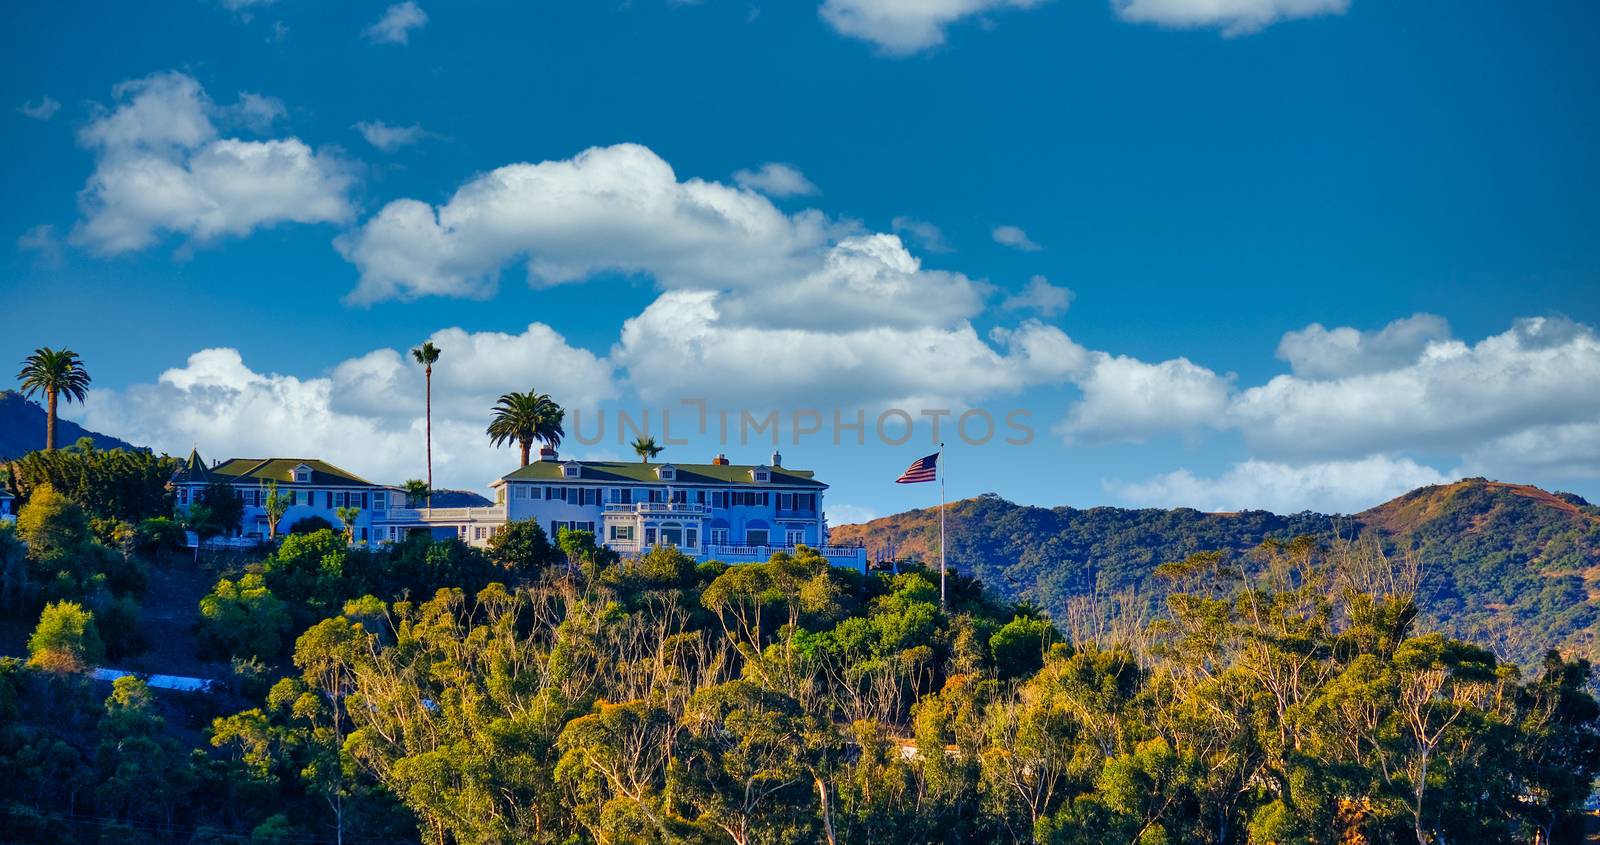 Resort Hotel on Catalina Island near Avalon